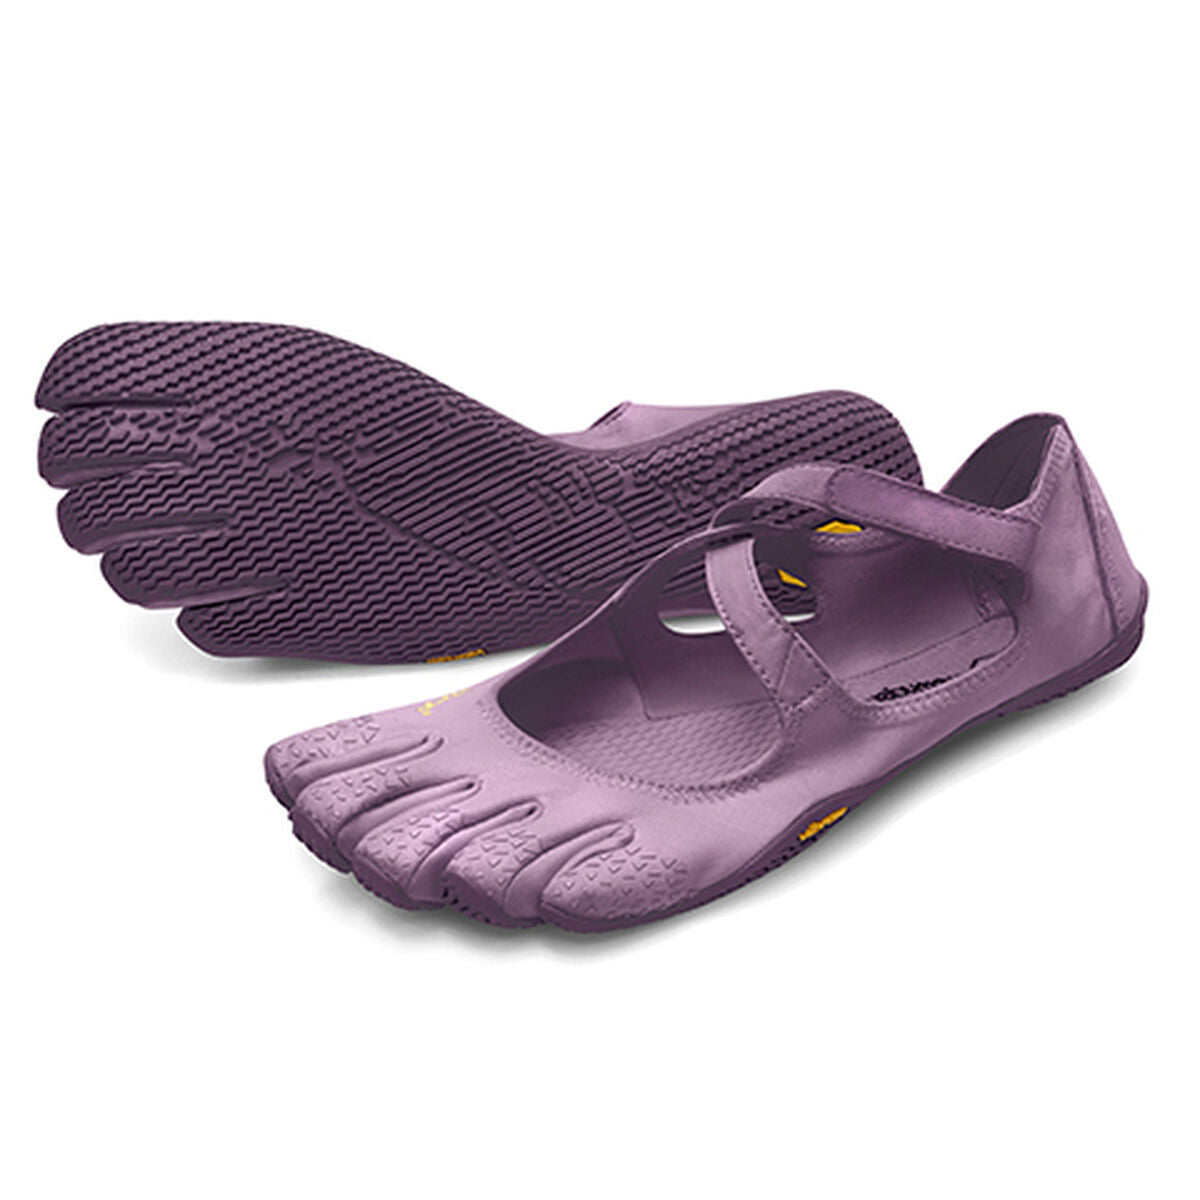 Women's Vibram Five Fingers V-Soul Training Shoe in Lavender from the front